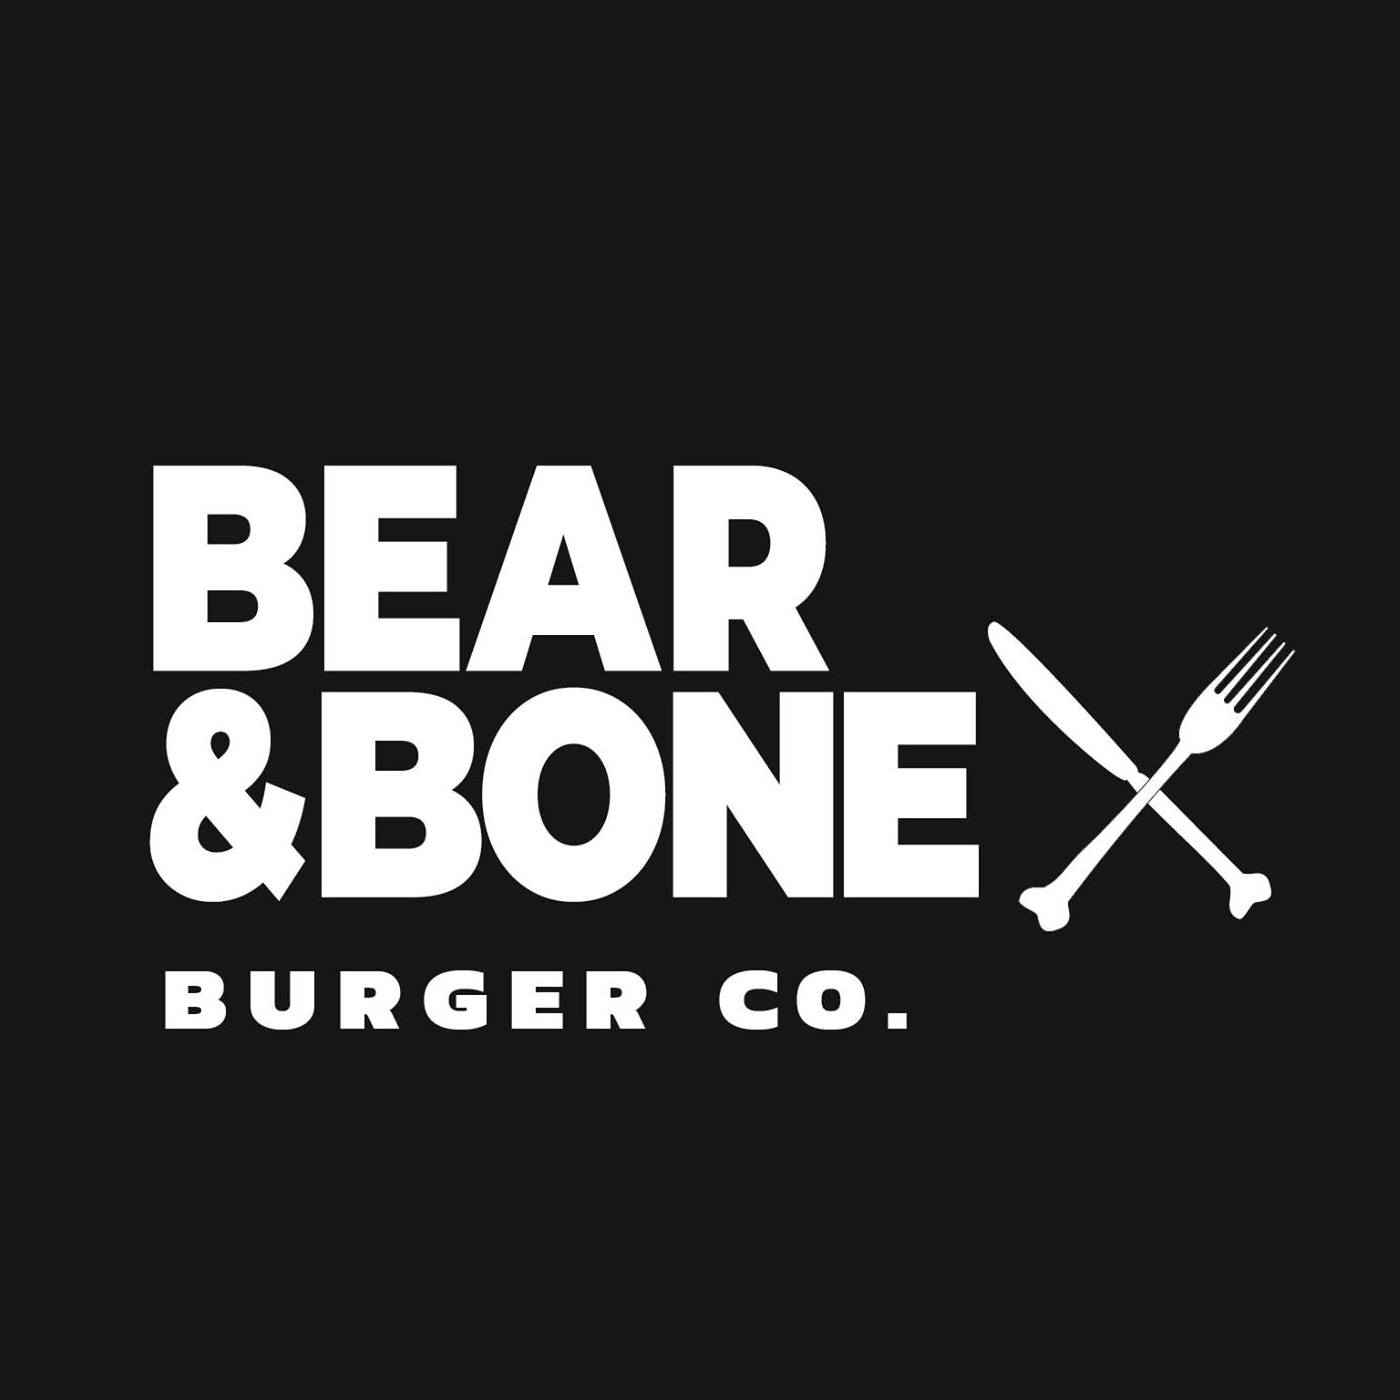 BEAR AND BONE BURGER CO